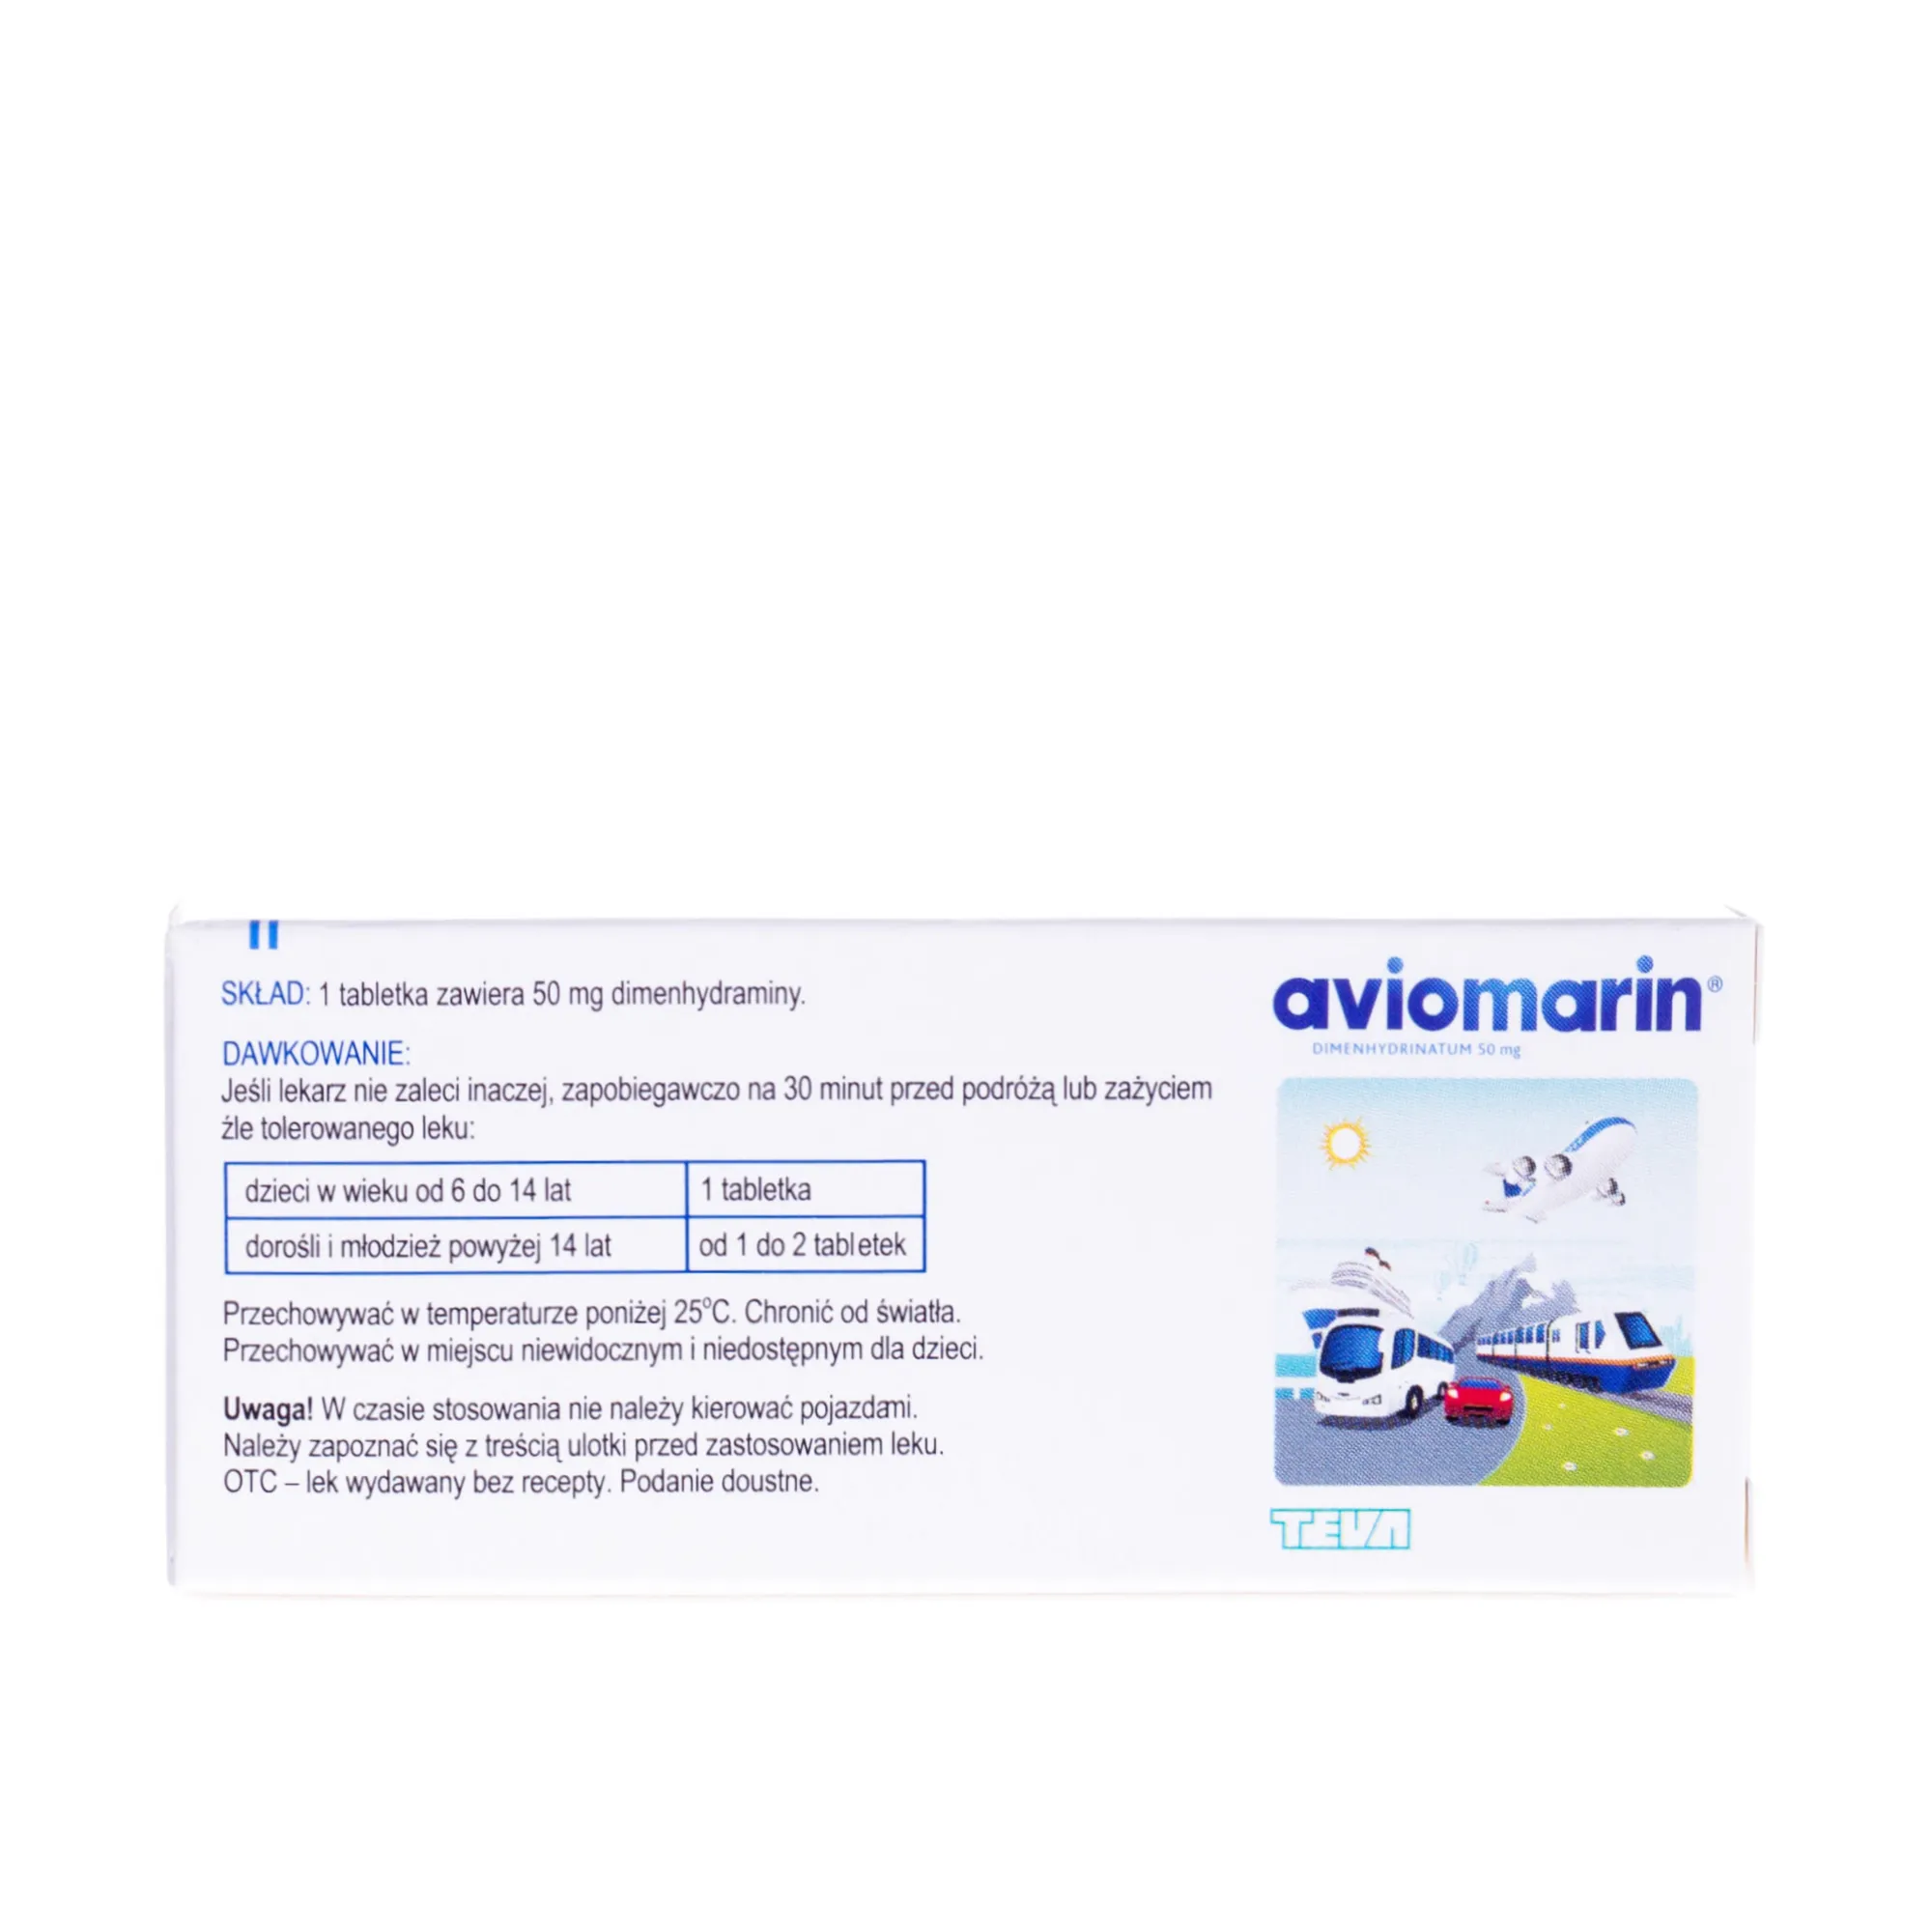 Aviomarin - lek stosowany w chorobie lokomocyjnej, 5 tabletek 